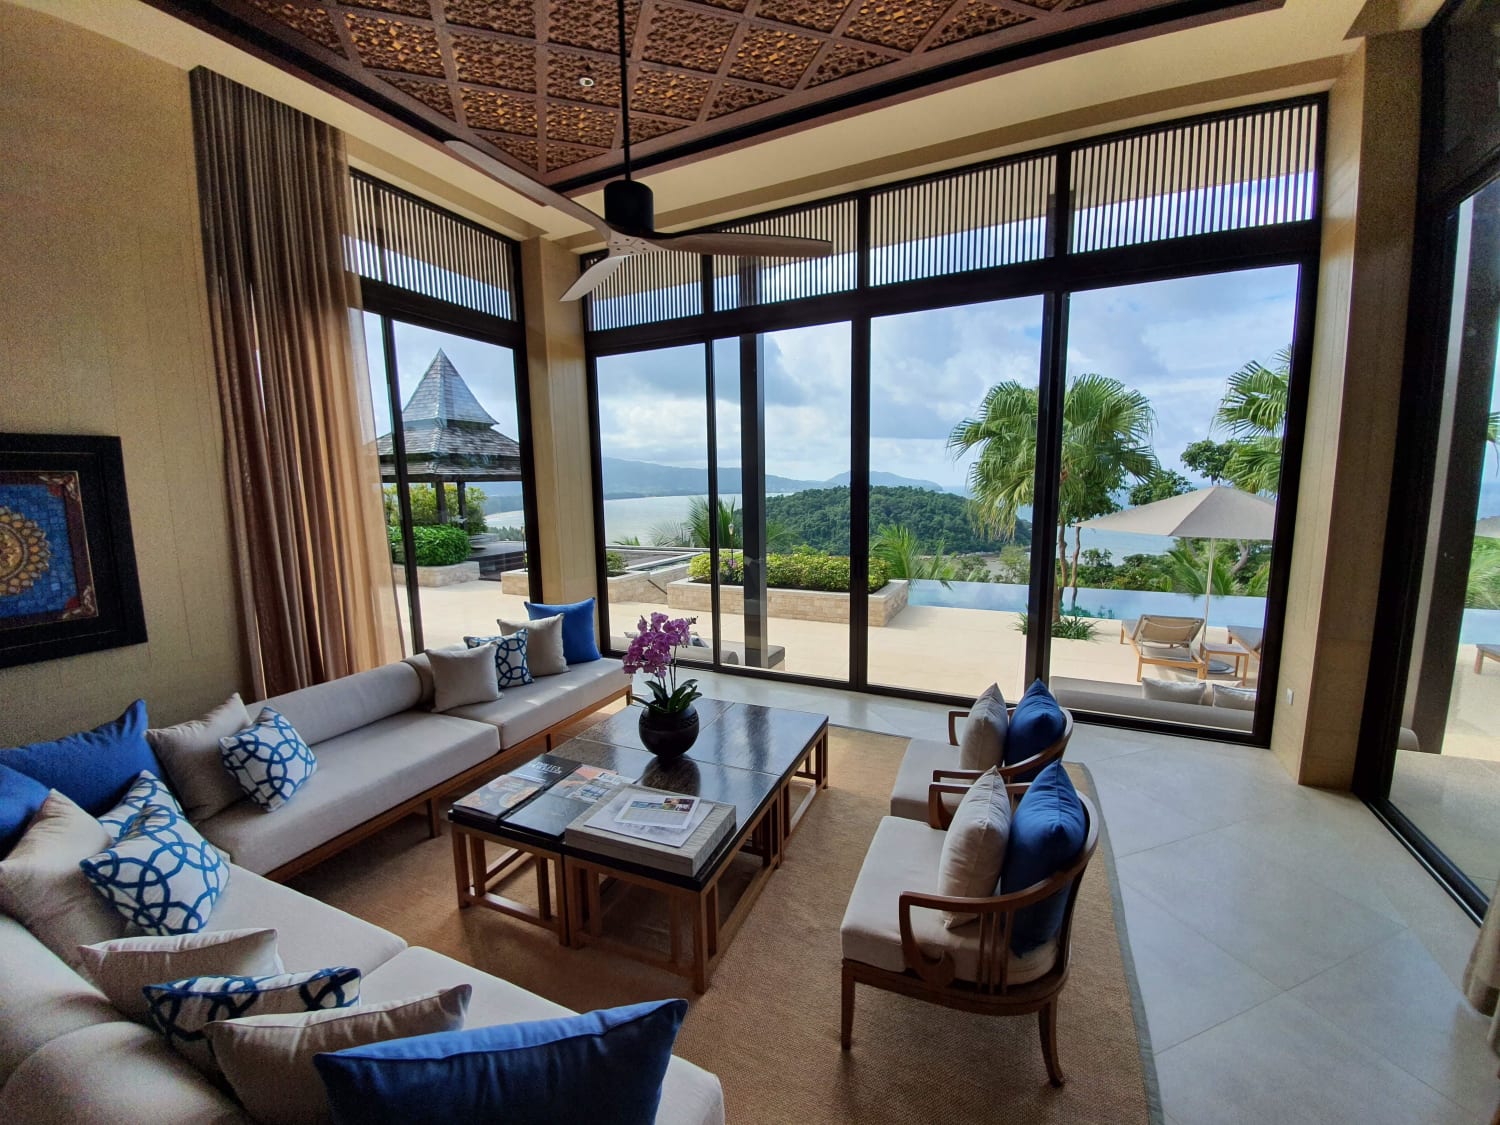 Living room of an 8 bedroom villa on a hill in Phuket, Thailand